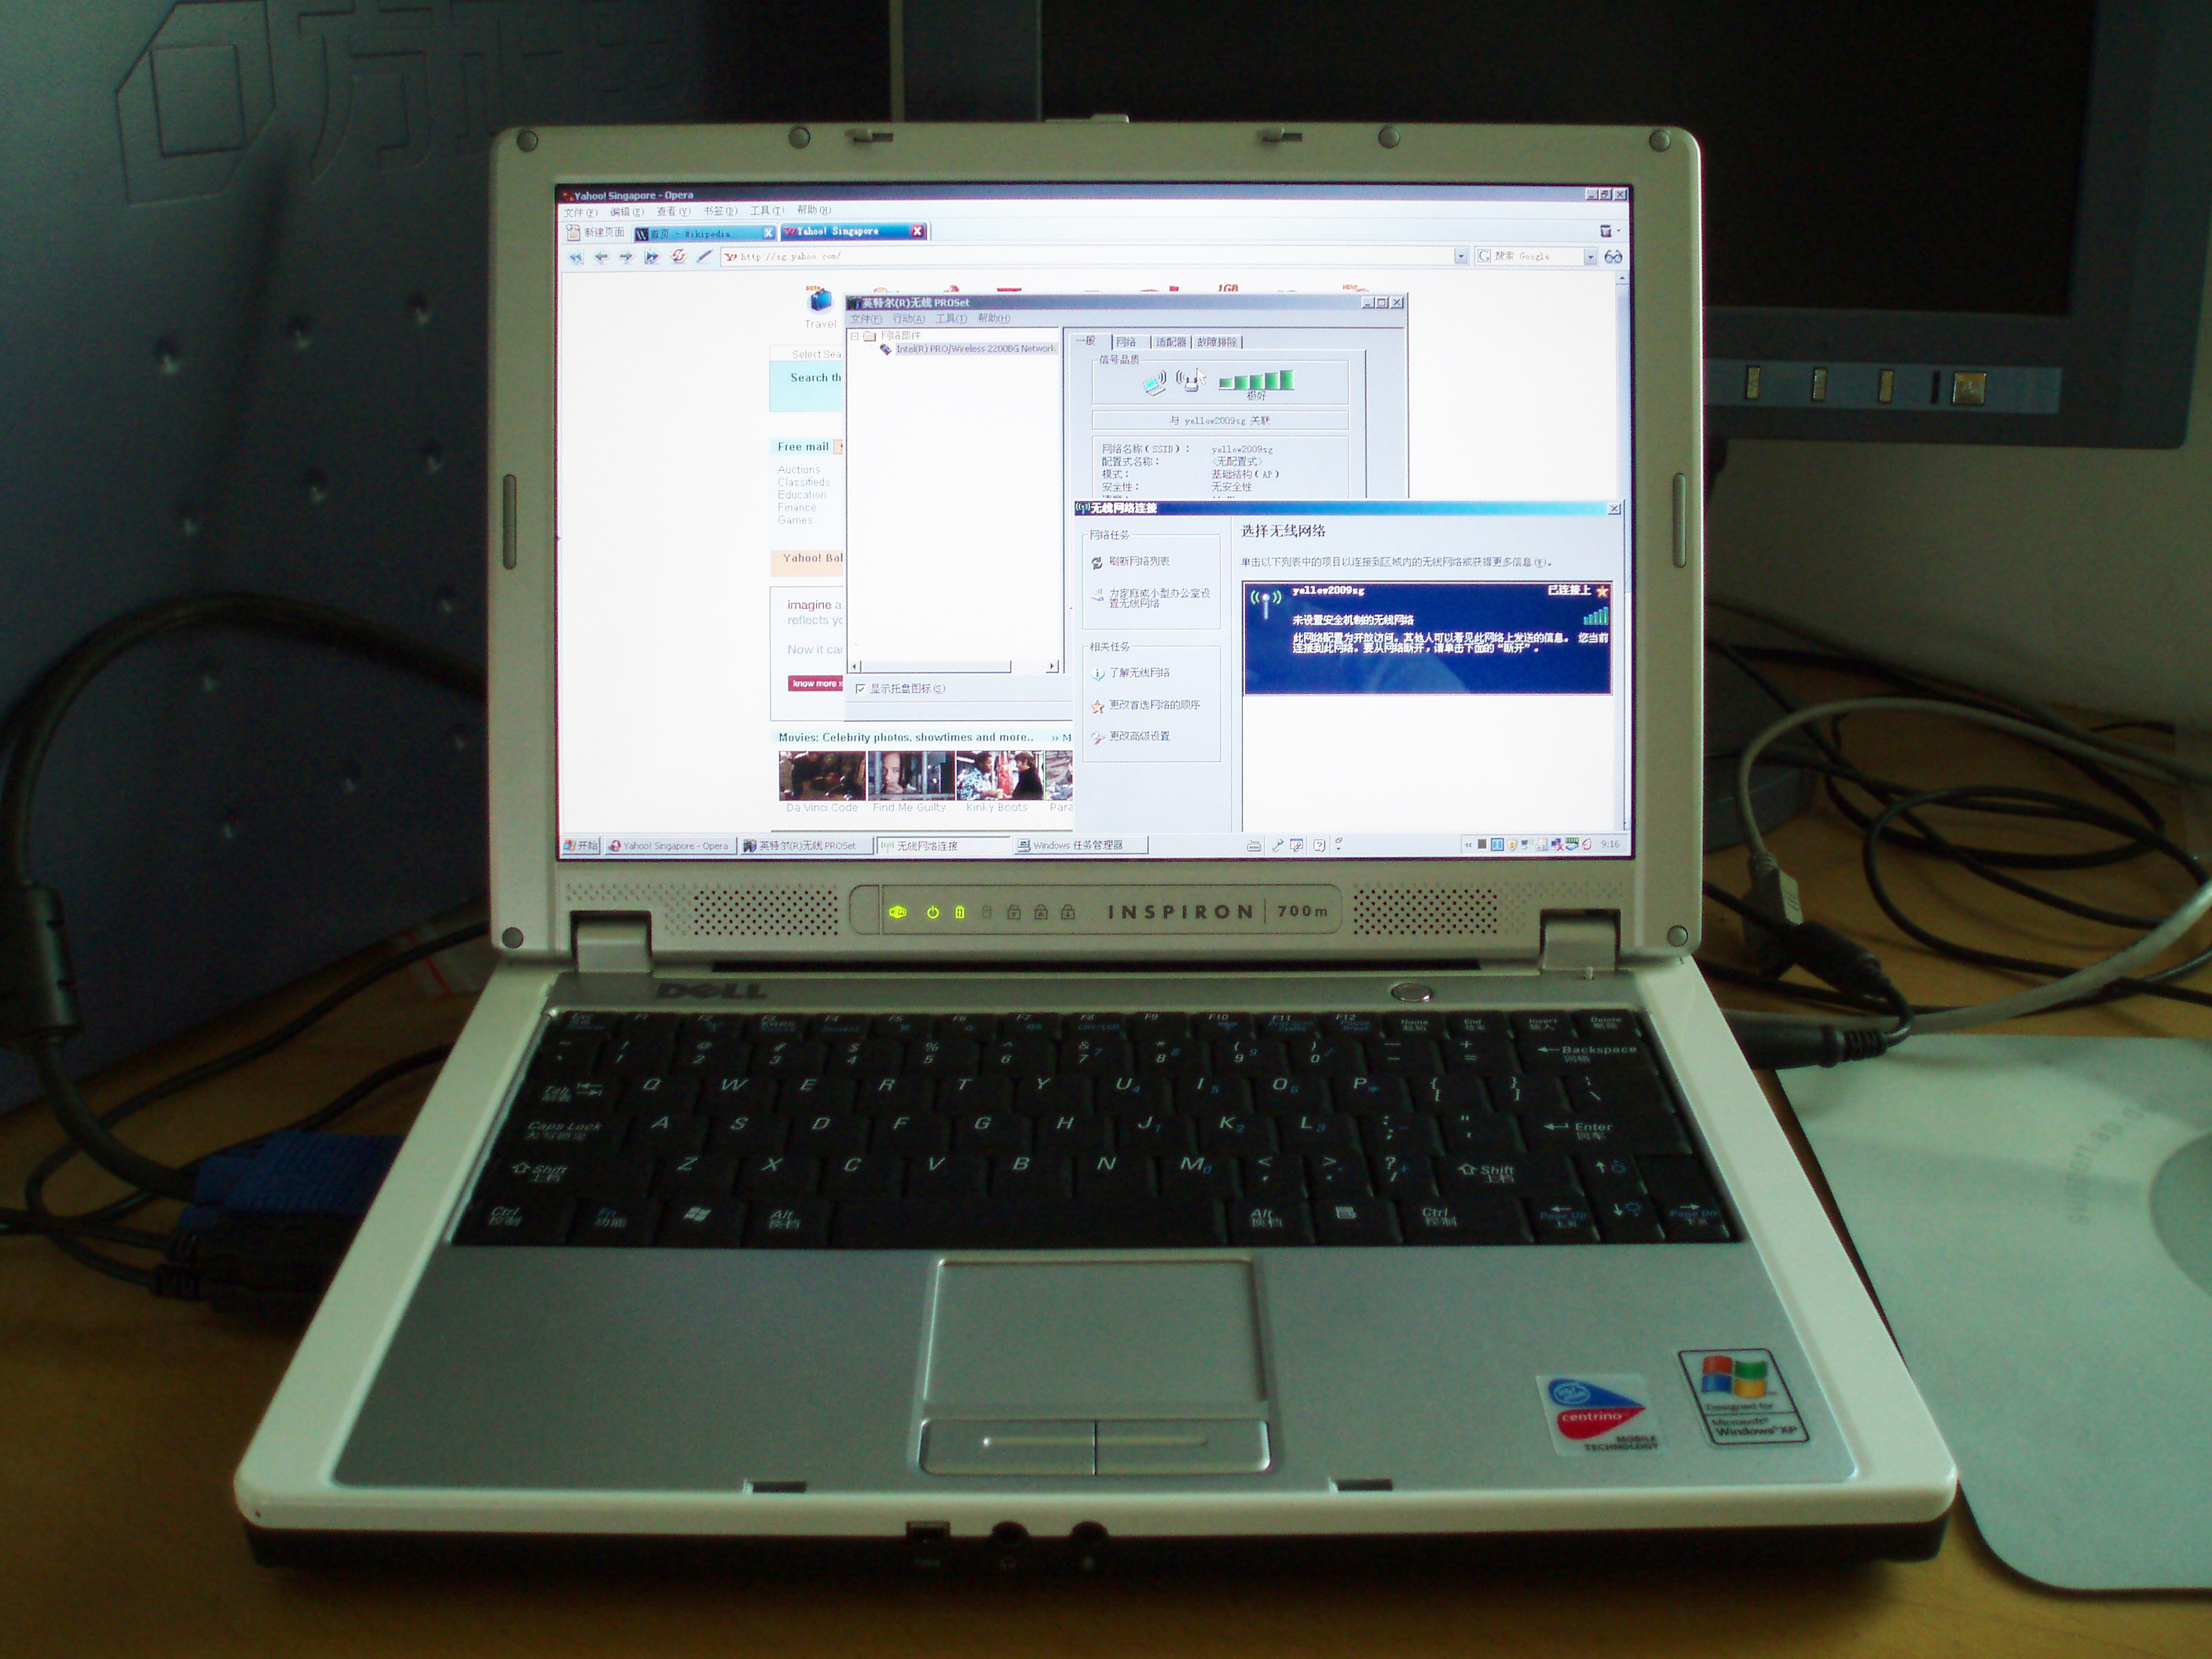 Dell Laptops Wikipedia